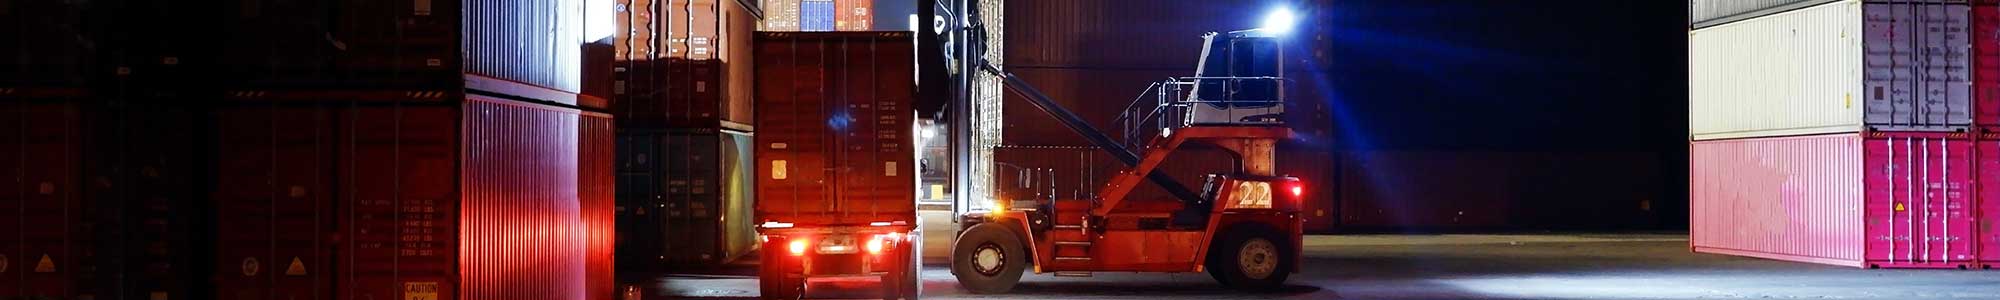 Truck som flytter containere i en mørk havn med scenebelysning og arbeidslys